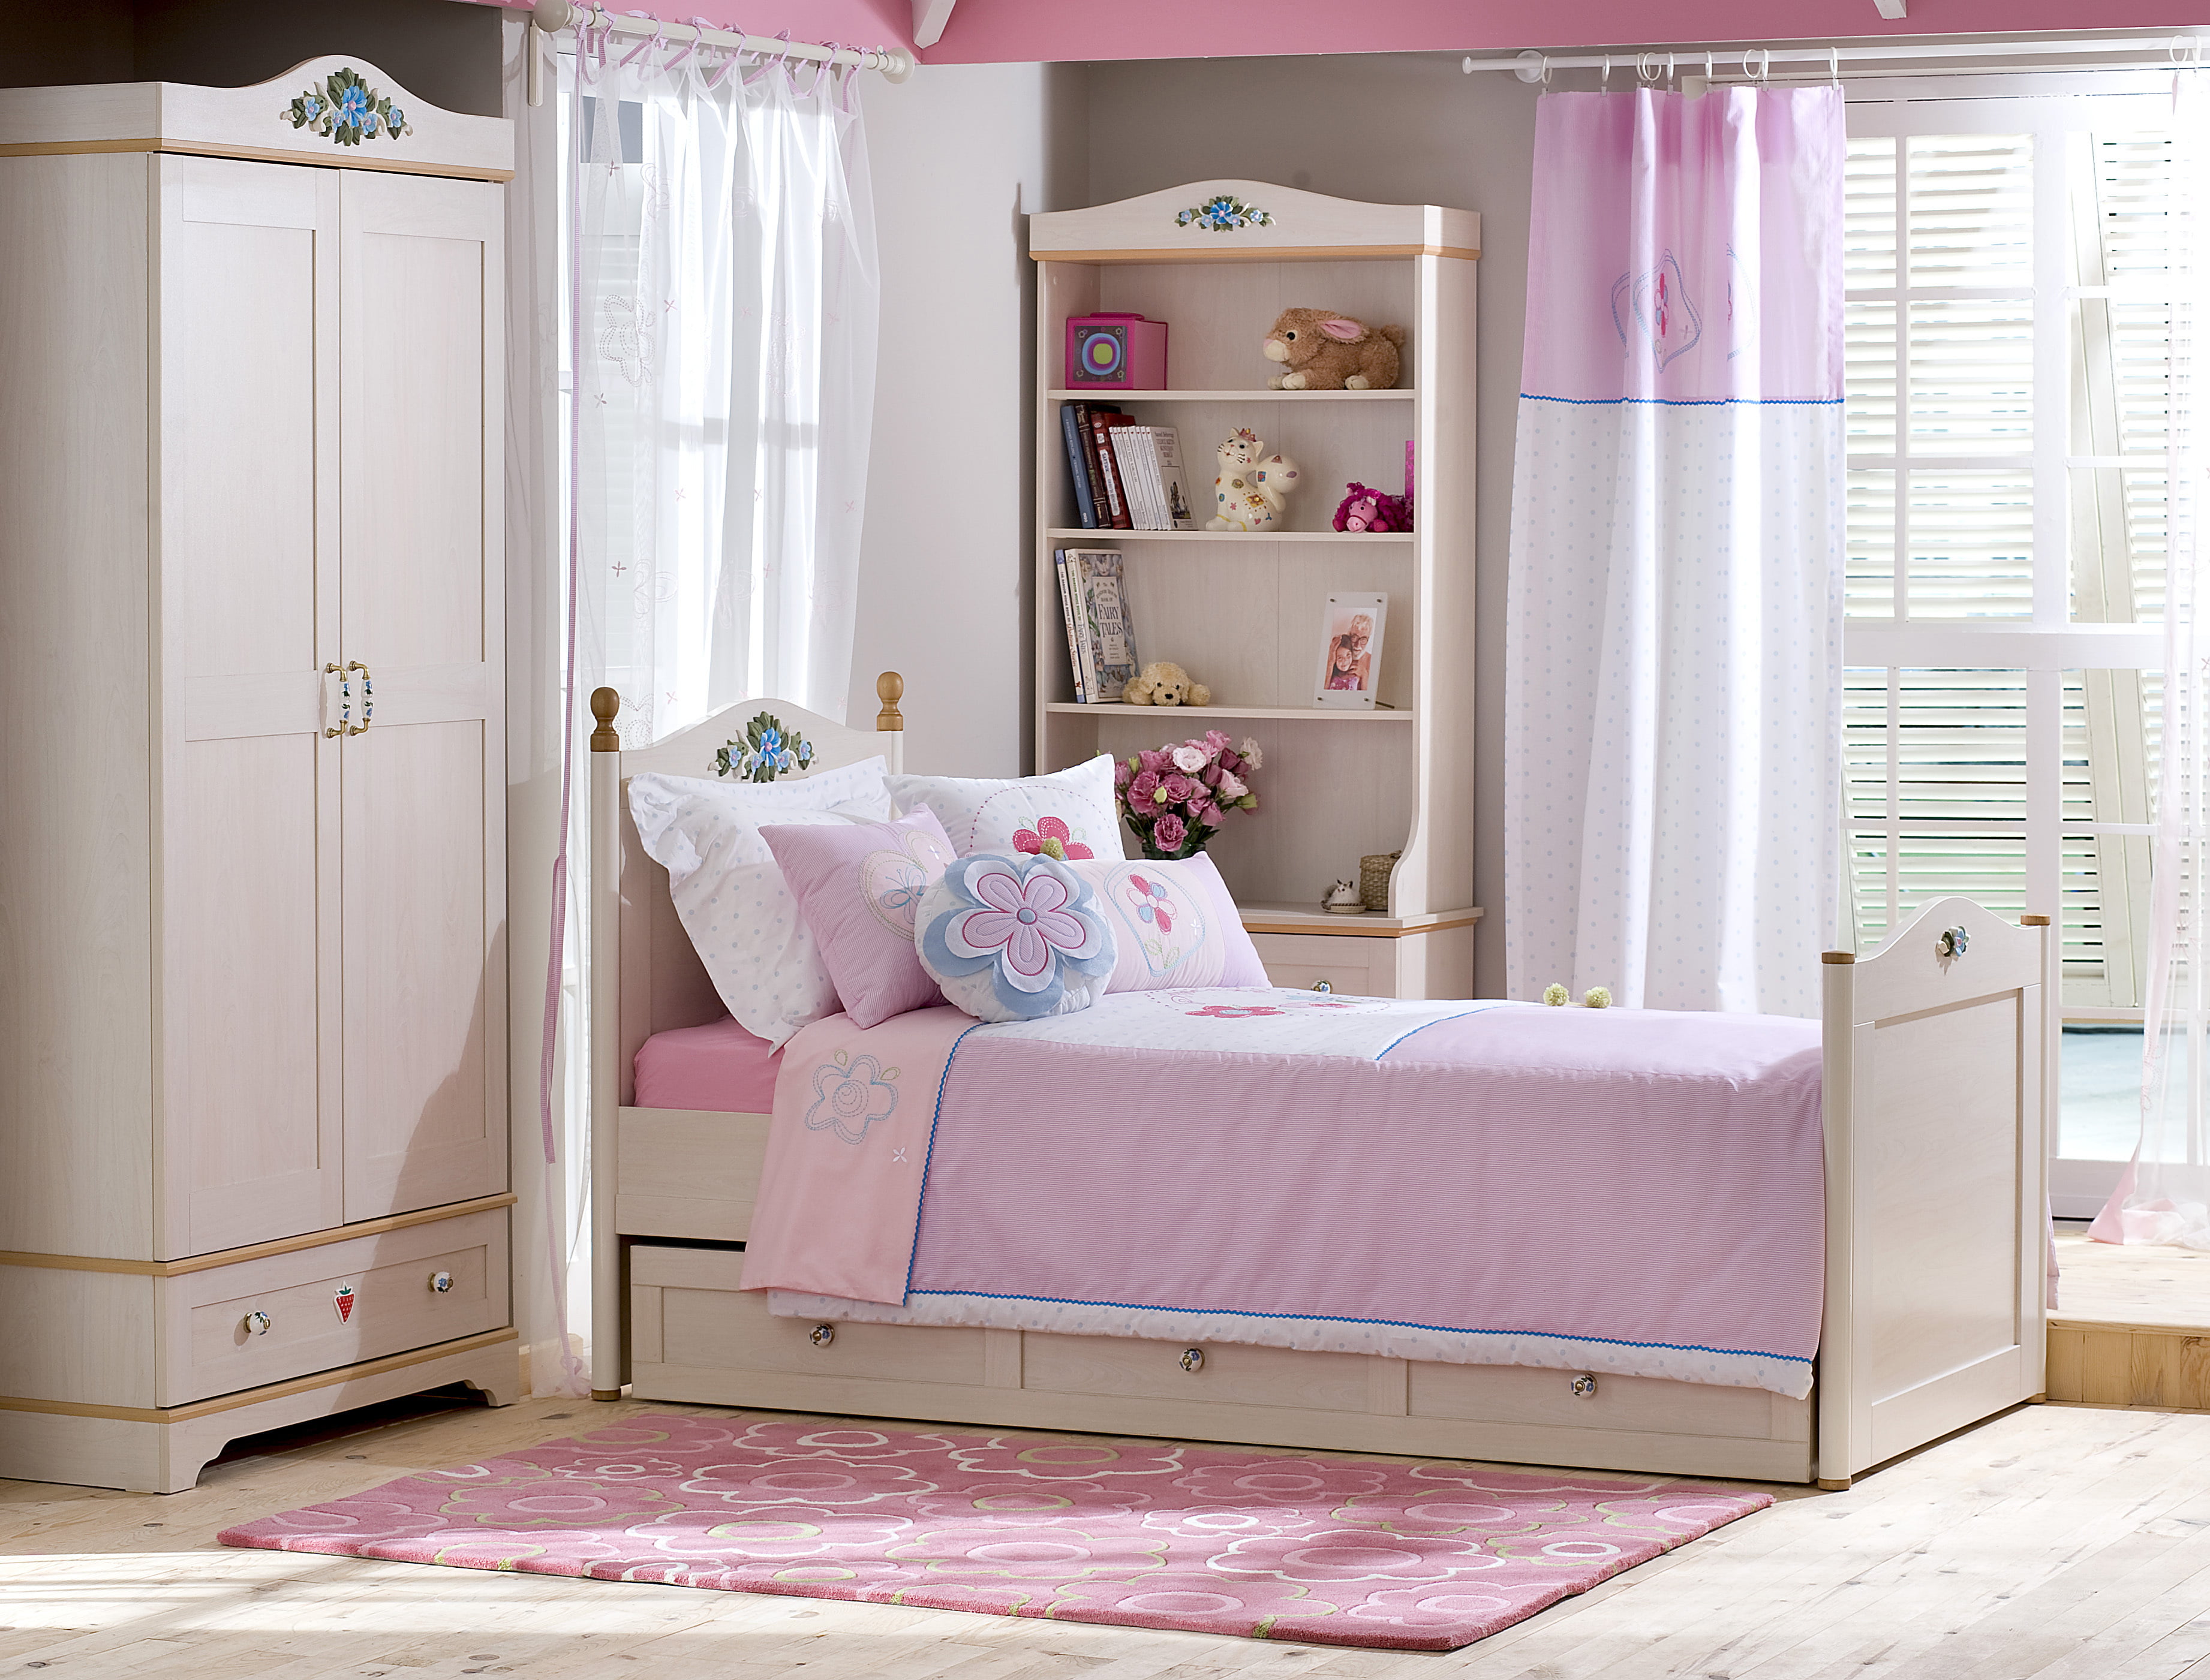 white wooden 2-door cabinet, books, bed, pillow, window, wardrobe